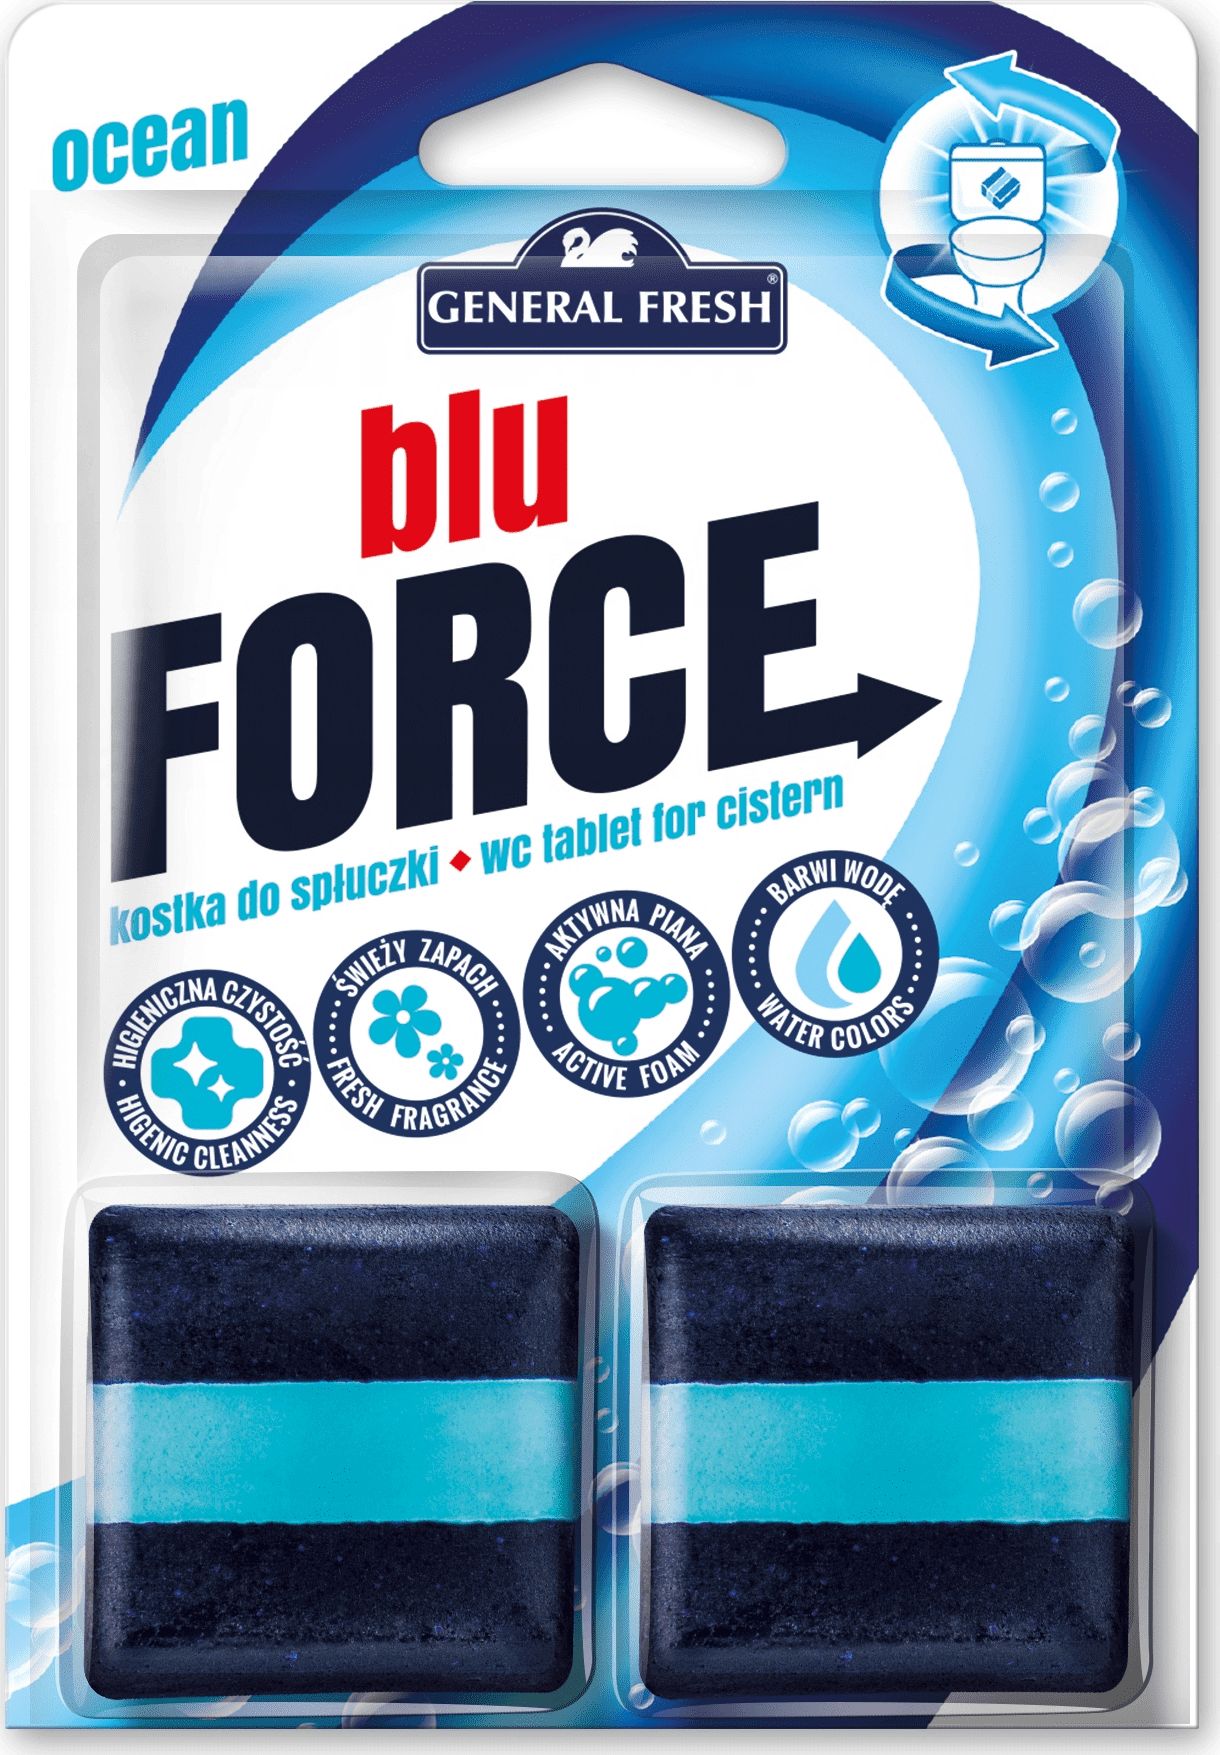 General Fresh GENERAL FRESH FORCE Albastru Morska 2x 50g - bloc de toaleta